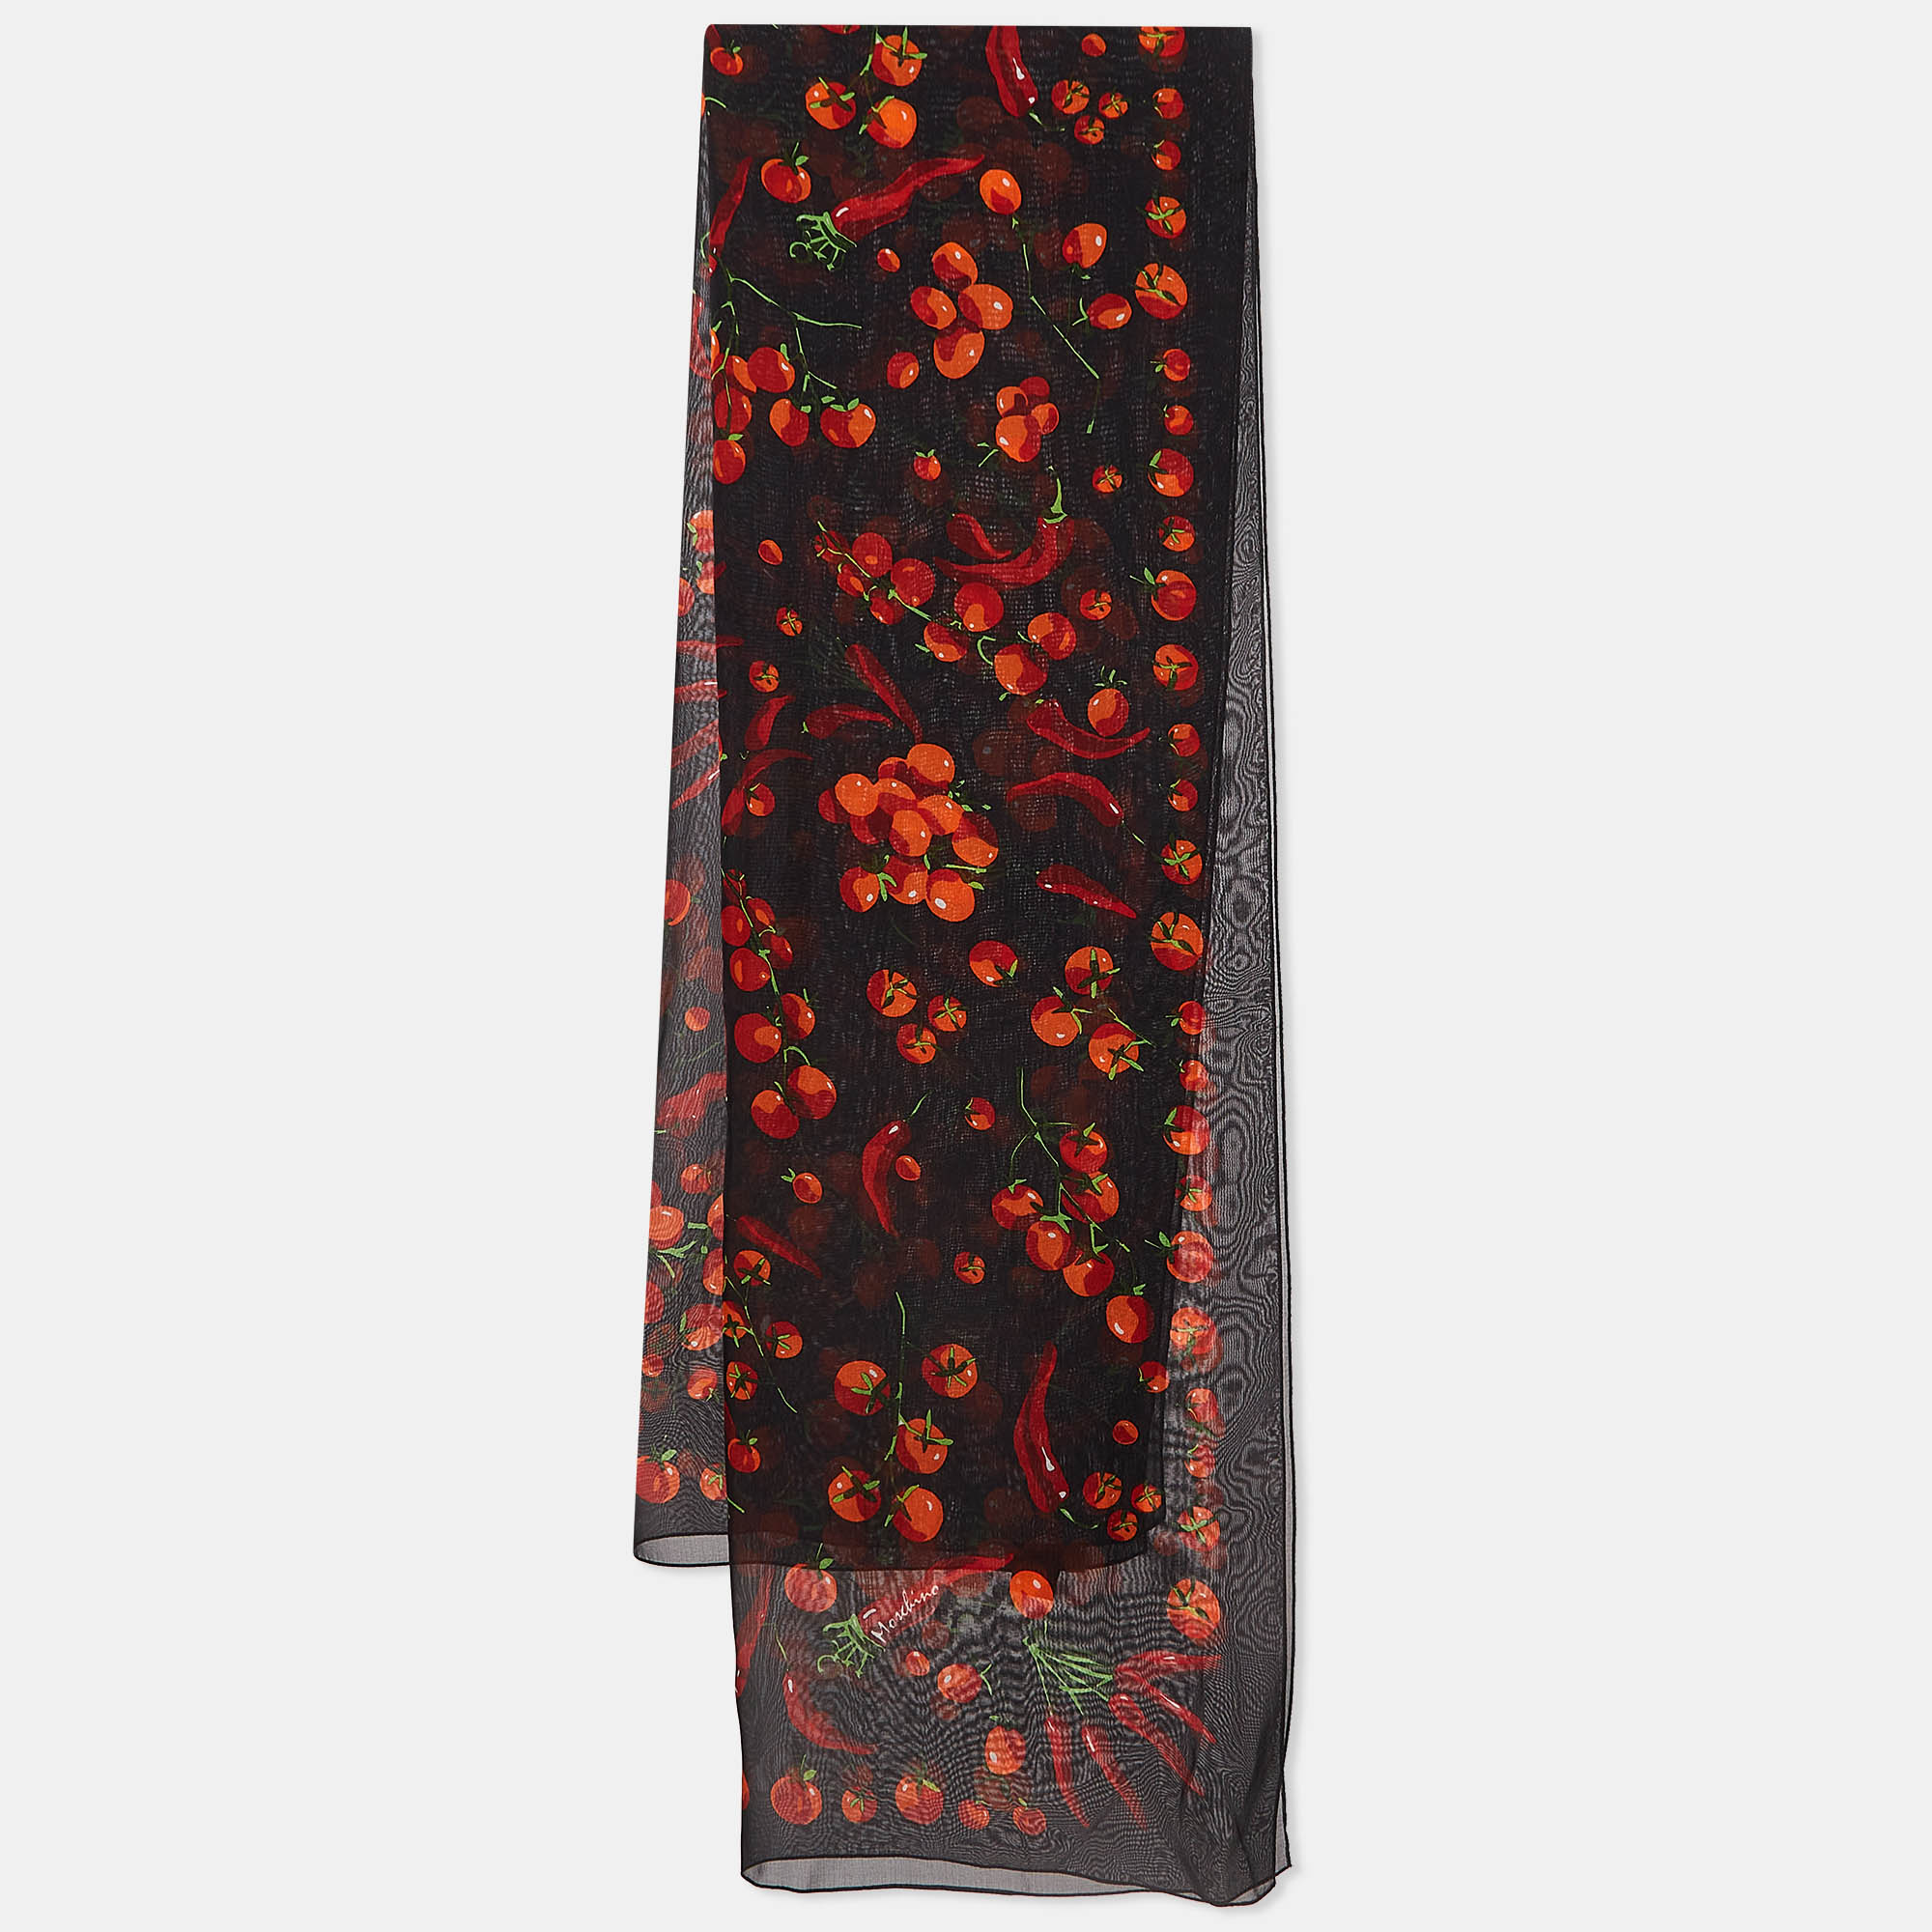 Moschino larioseta black tomato/cherry printed silk scarf